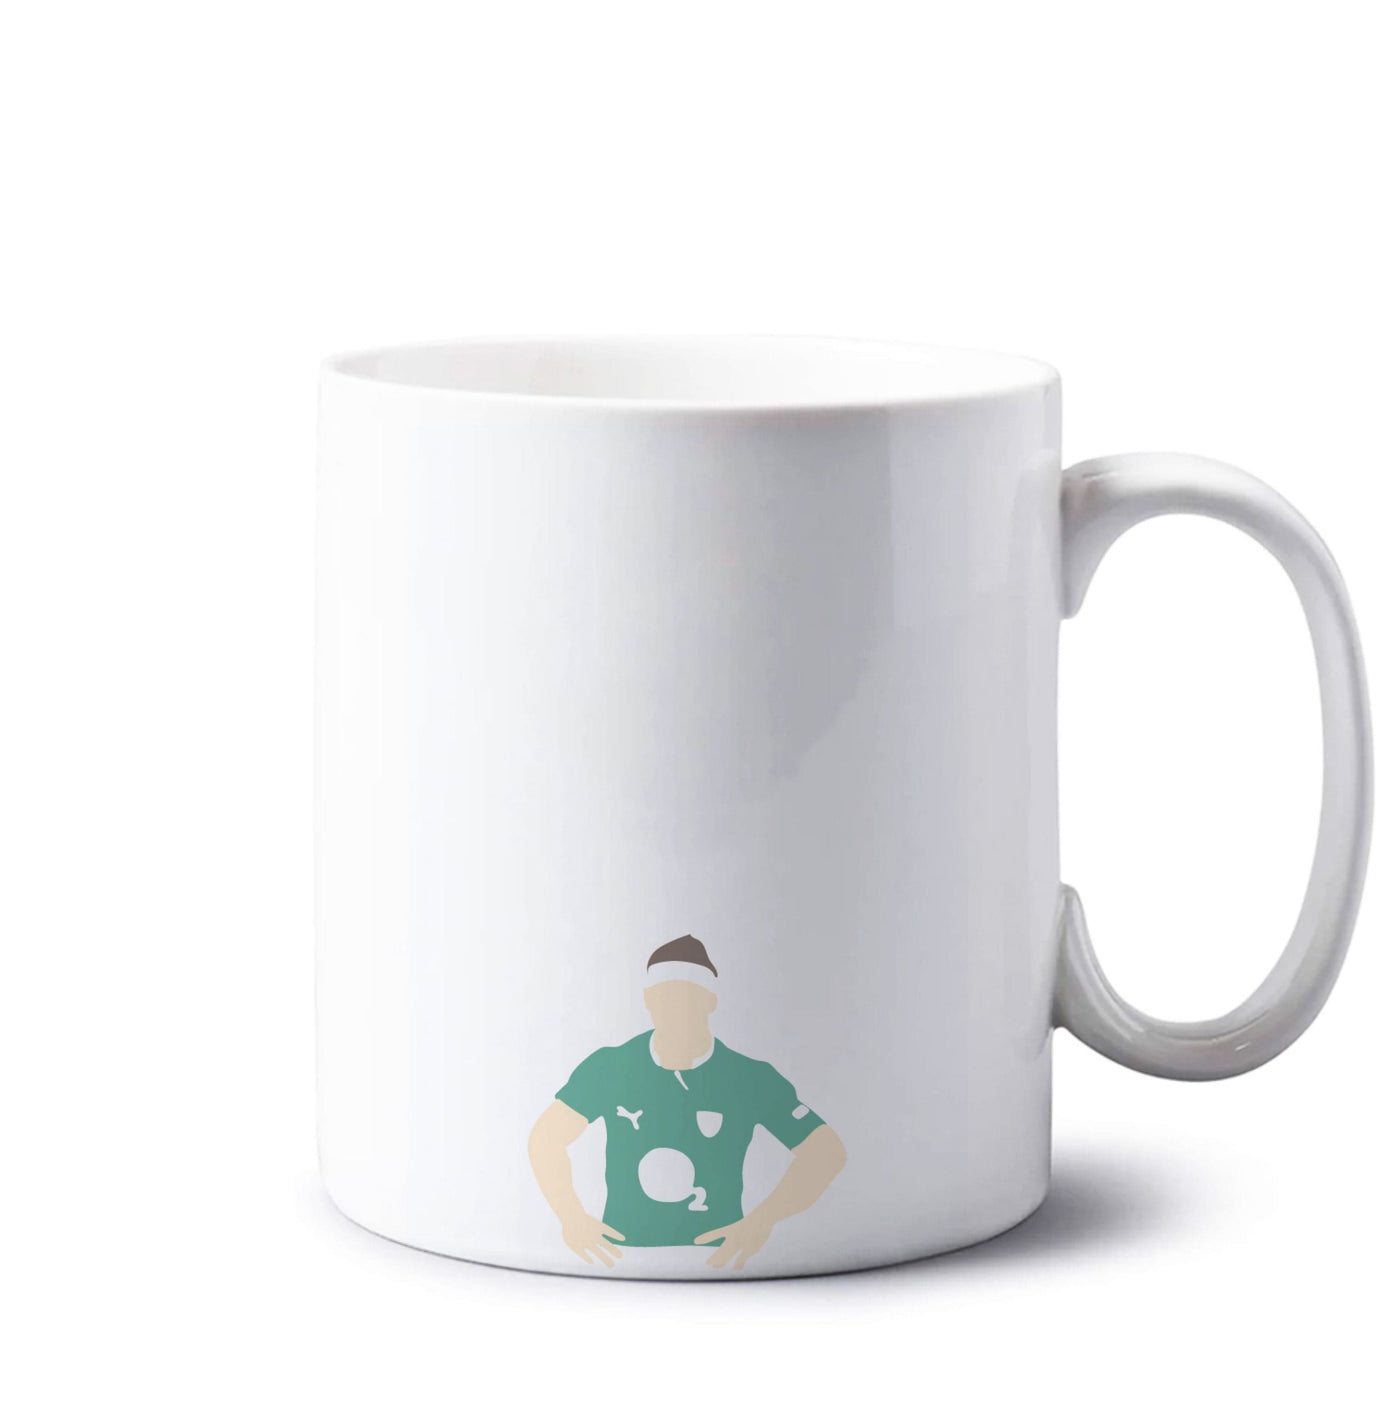 Brian O'Driscoll - Rugby Mug